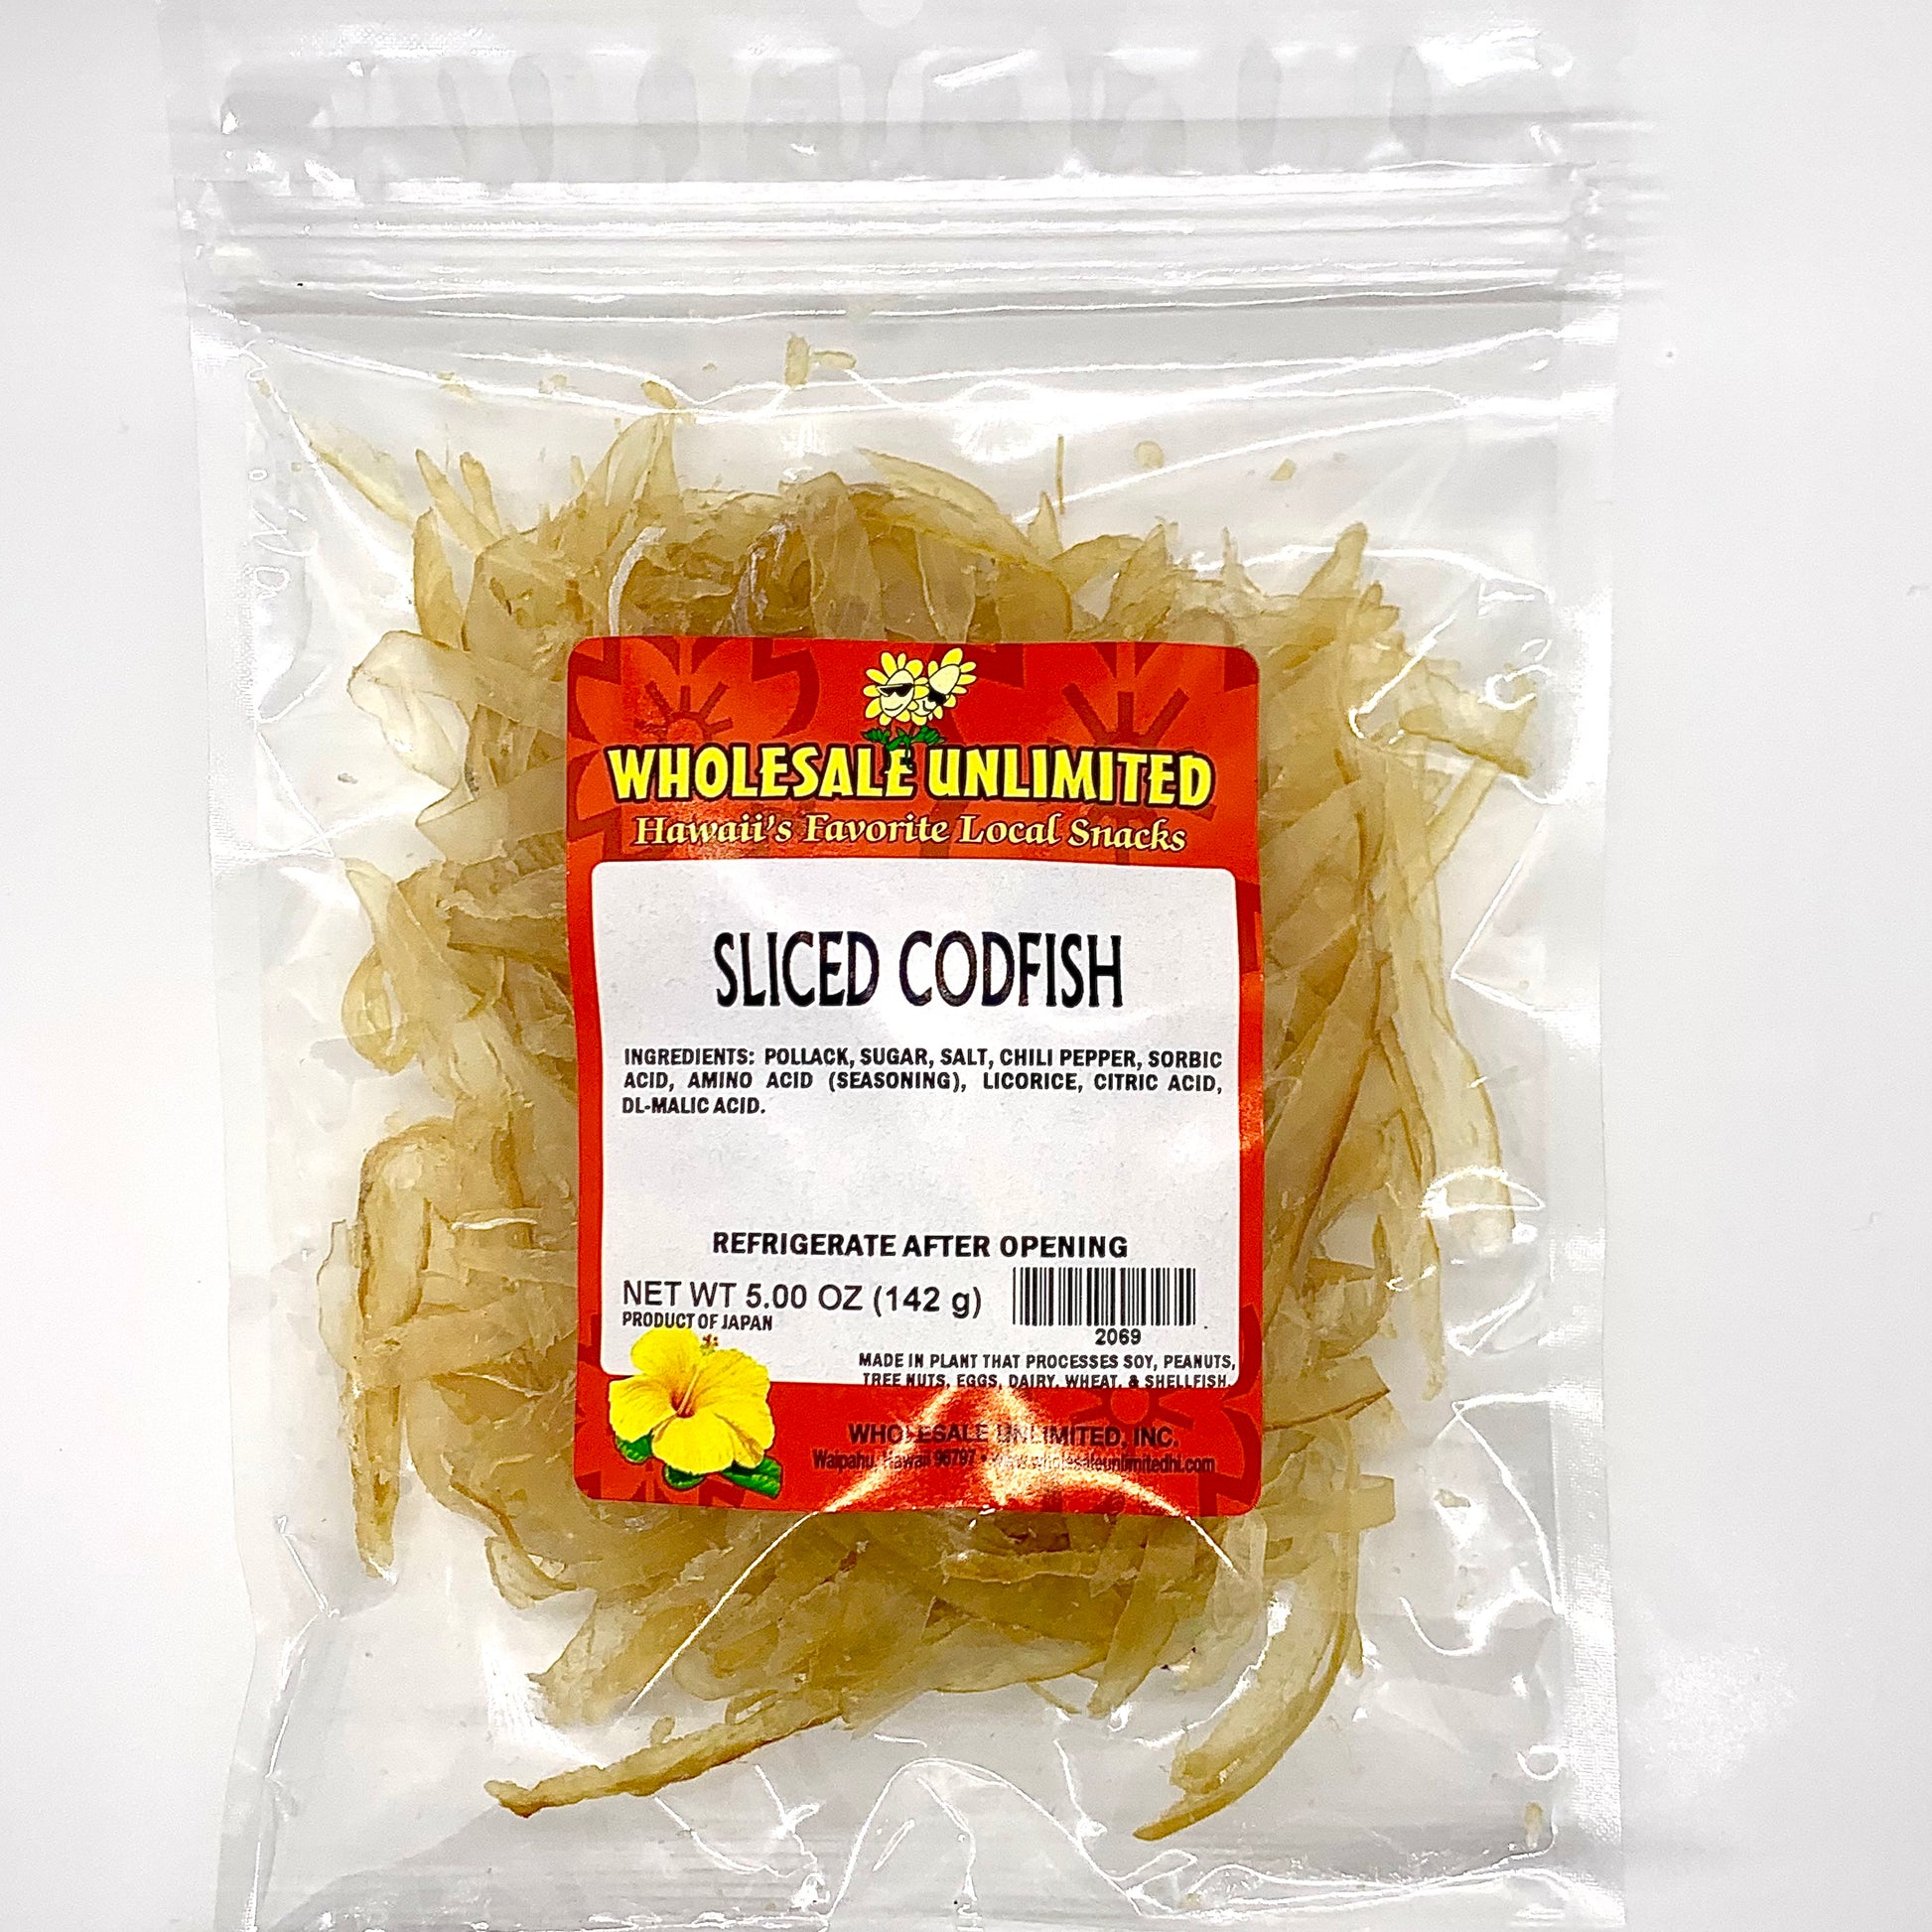 (NEW) Sliced Codfish - Wholesale Unlimited Inc.